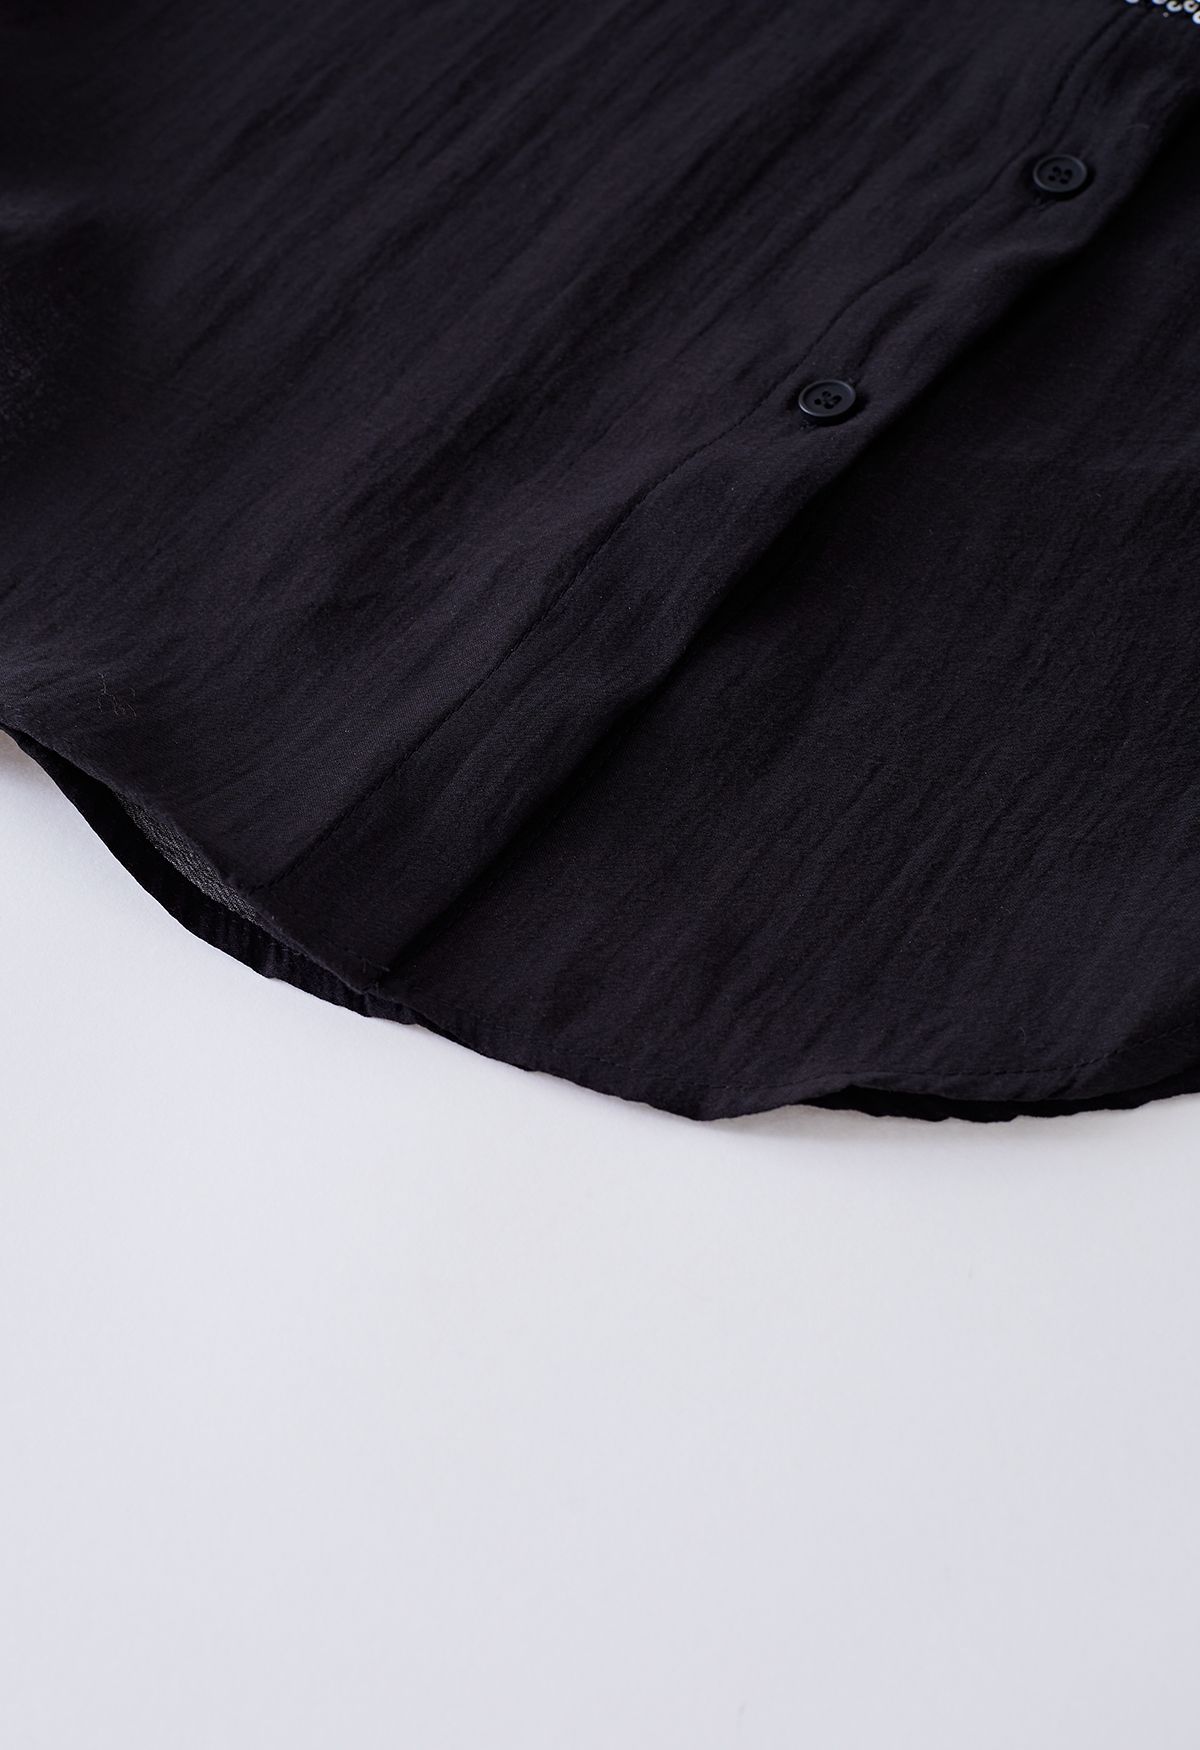 Sparkling Sequin Embellished Button Down Shirt in Black